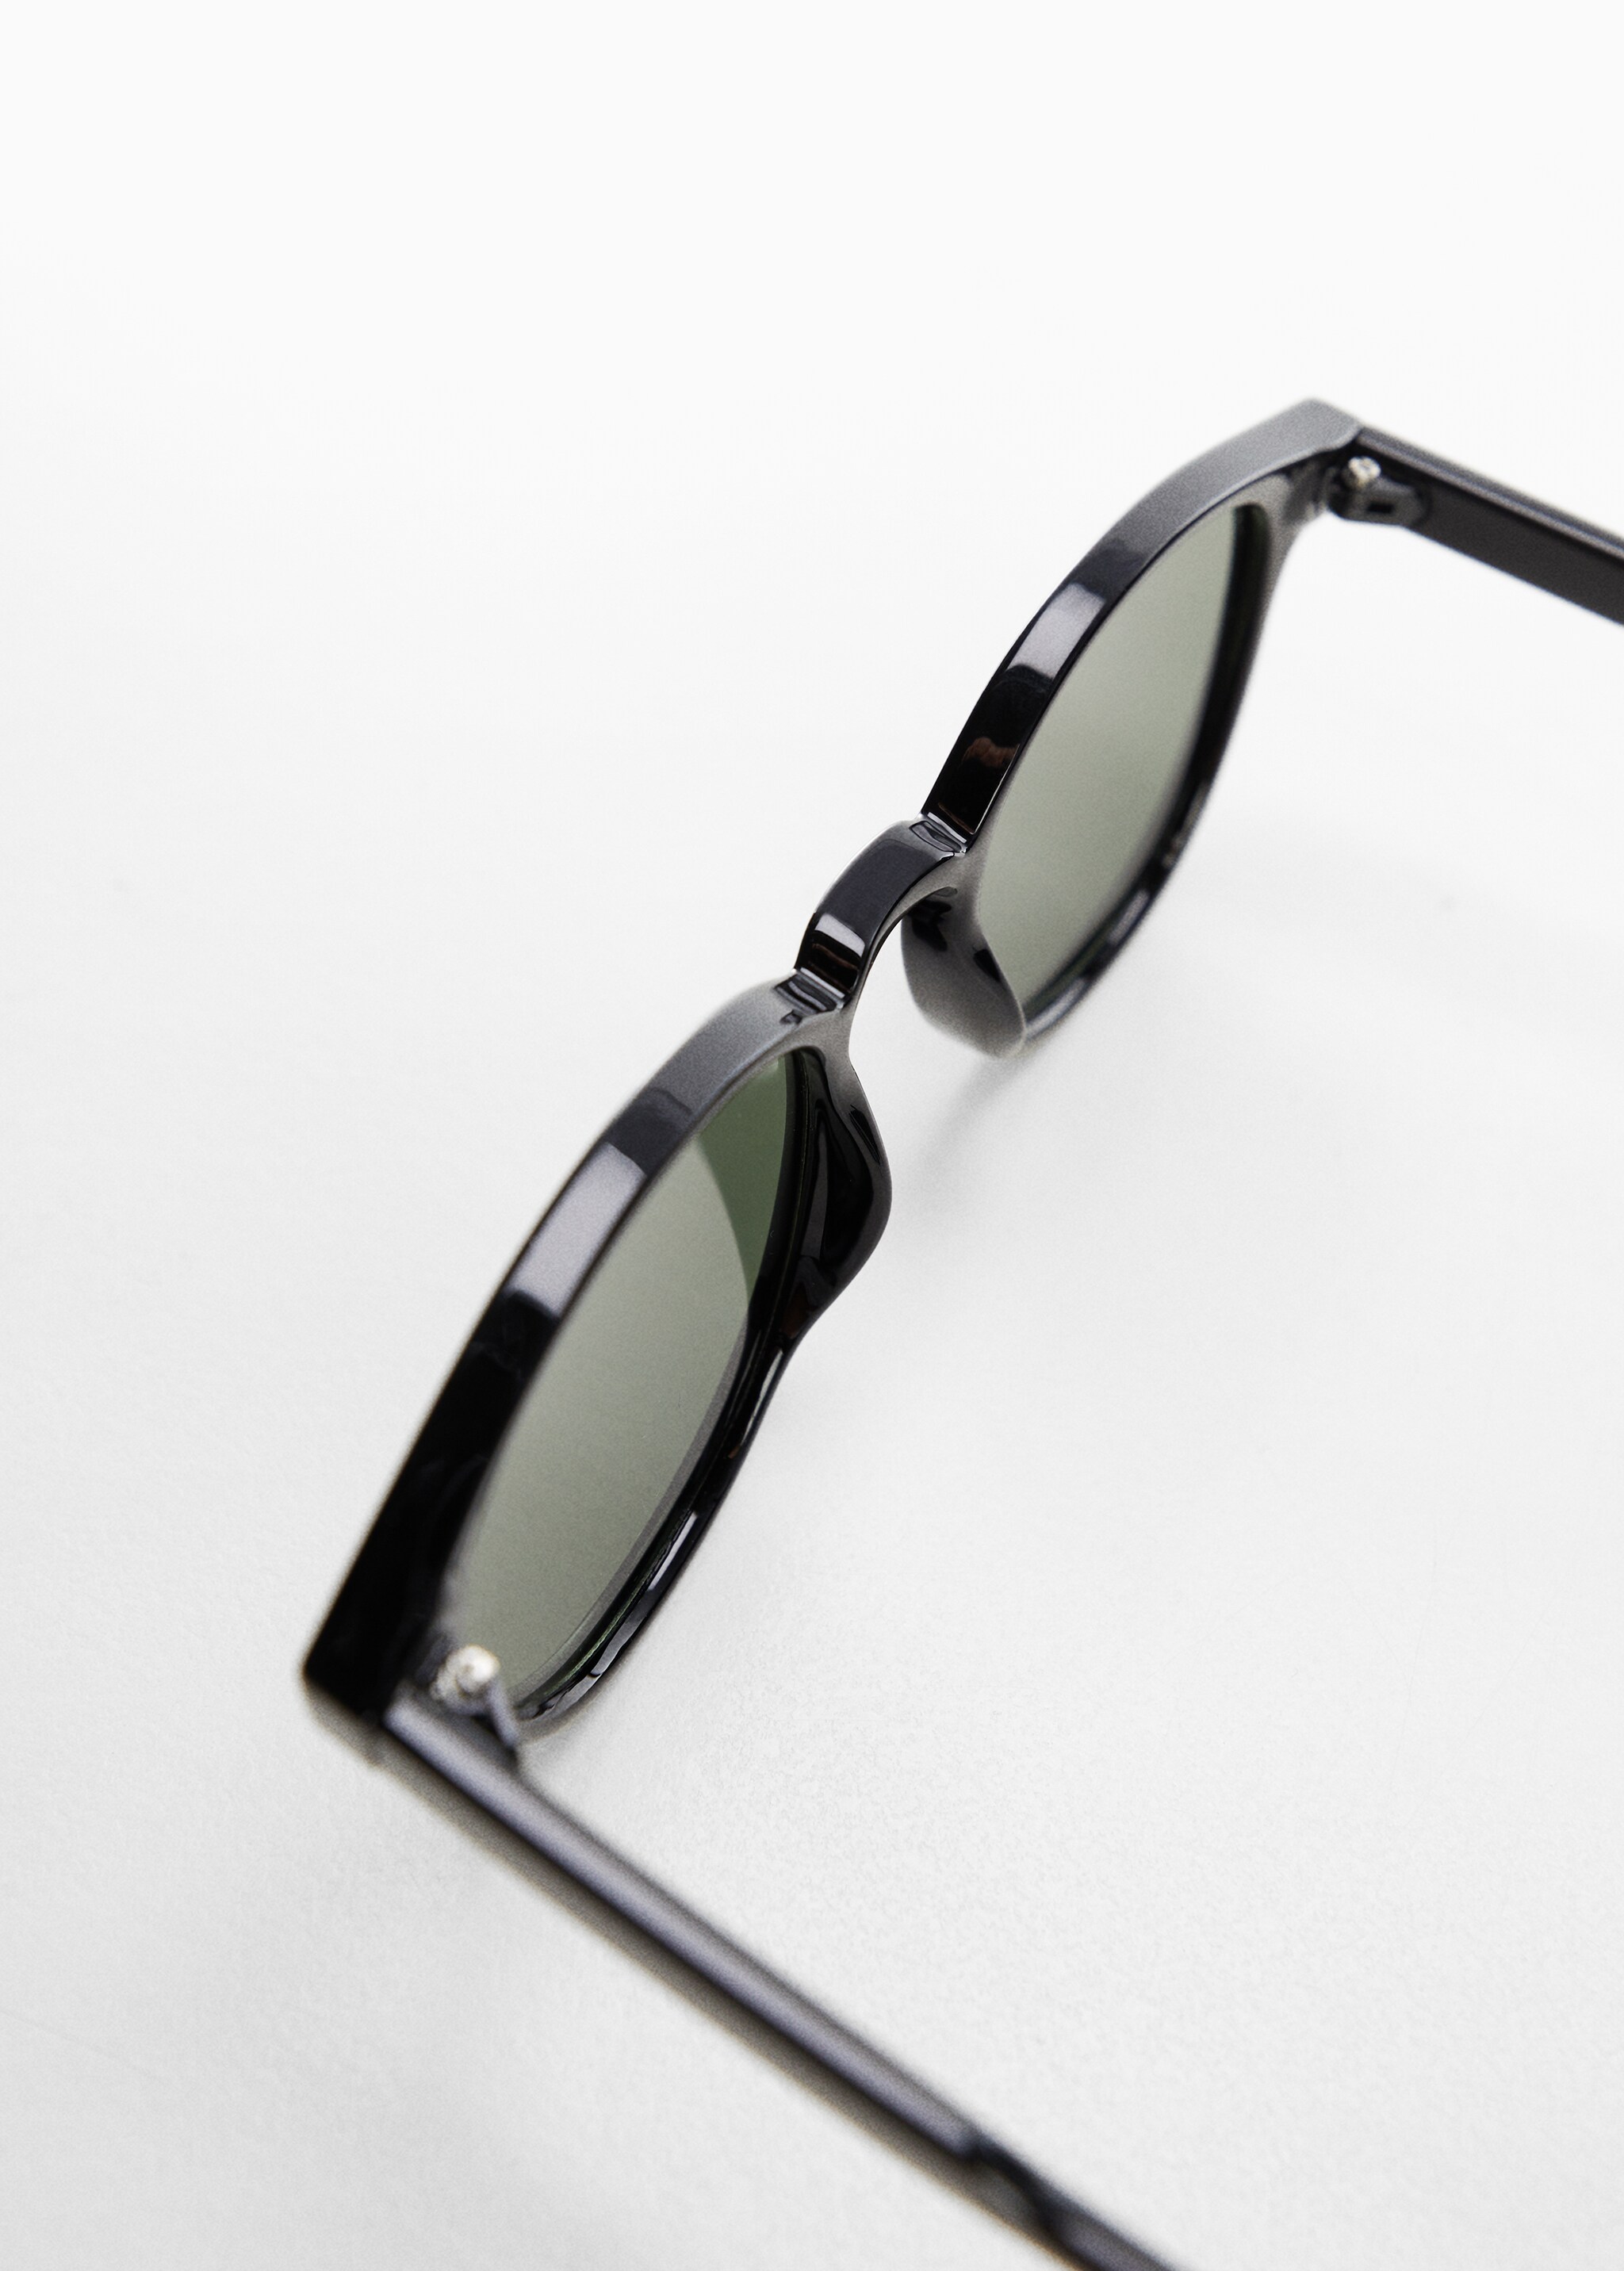 Polarised sunglasses - Details of the article 1